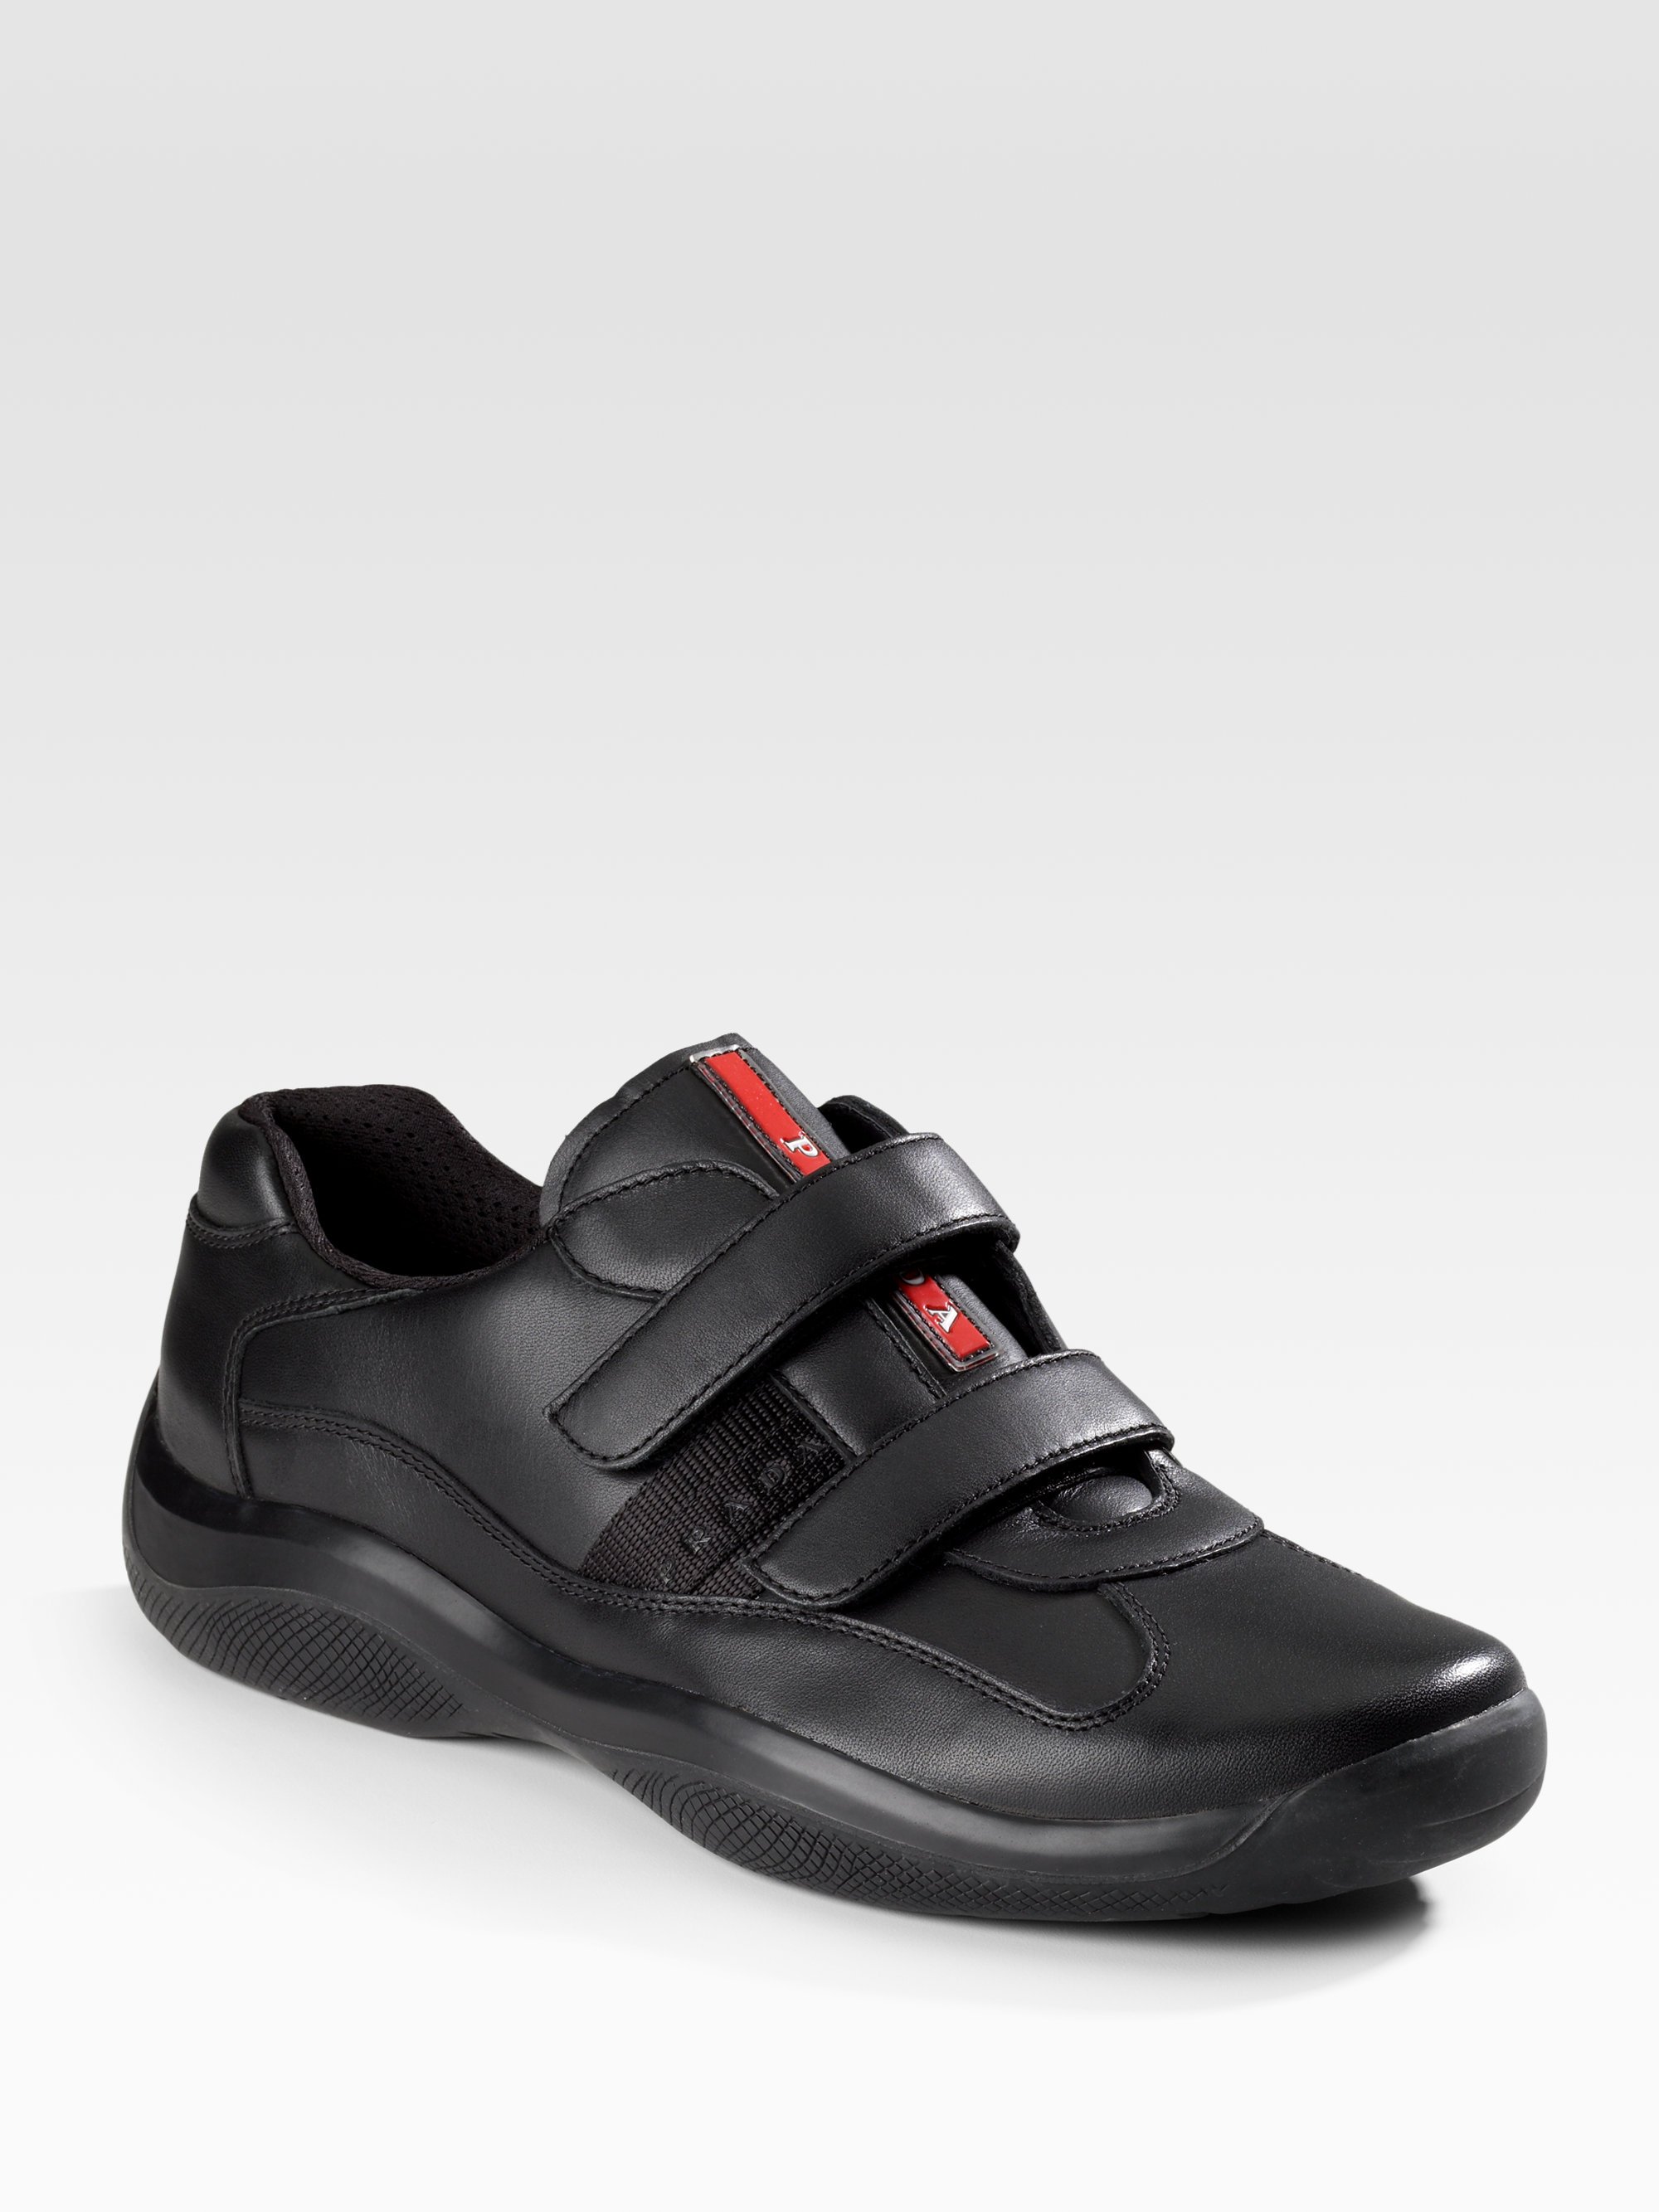 Prada Double-strap Sneakers in Black for Men - Lyst